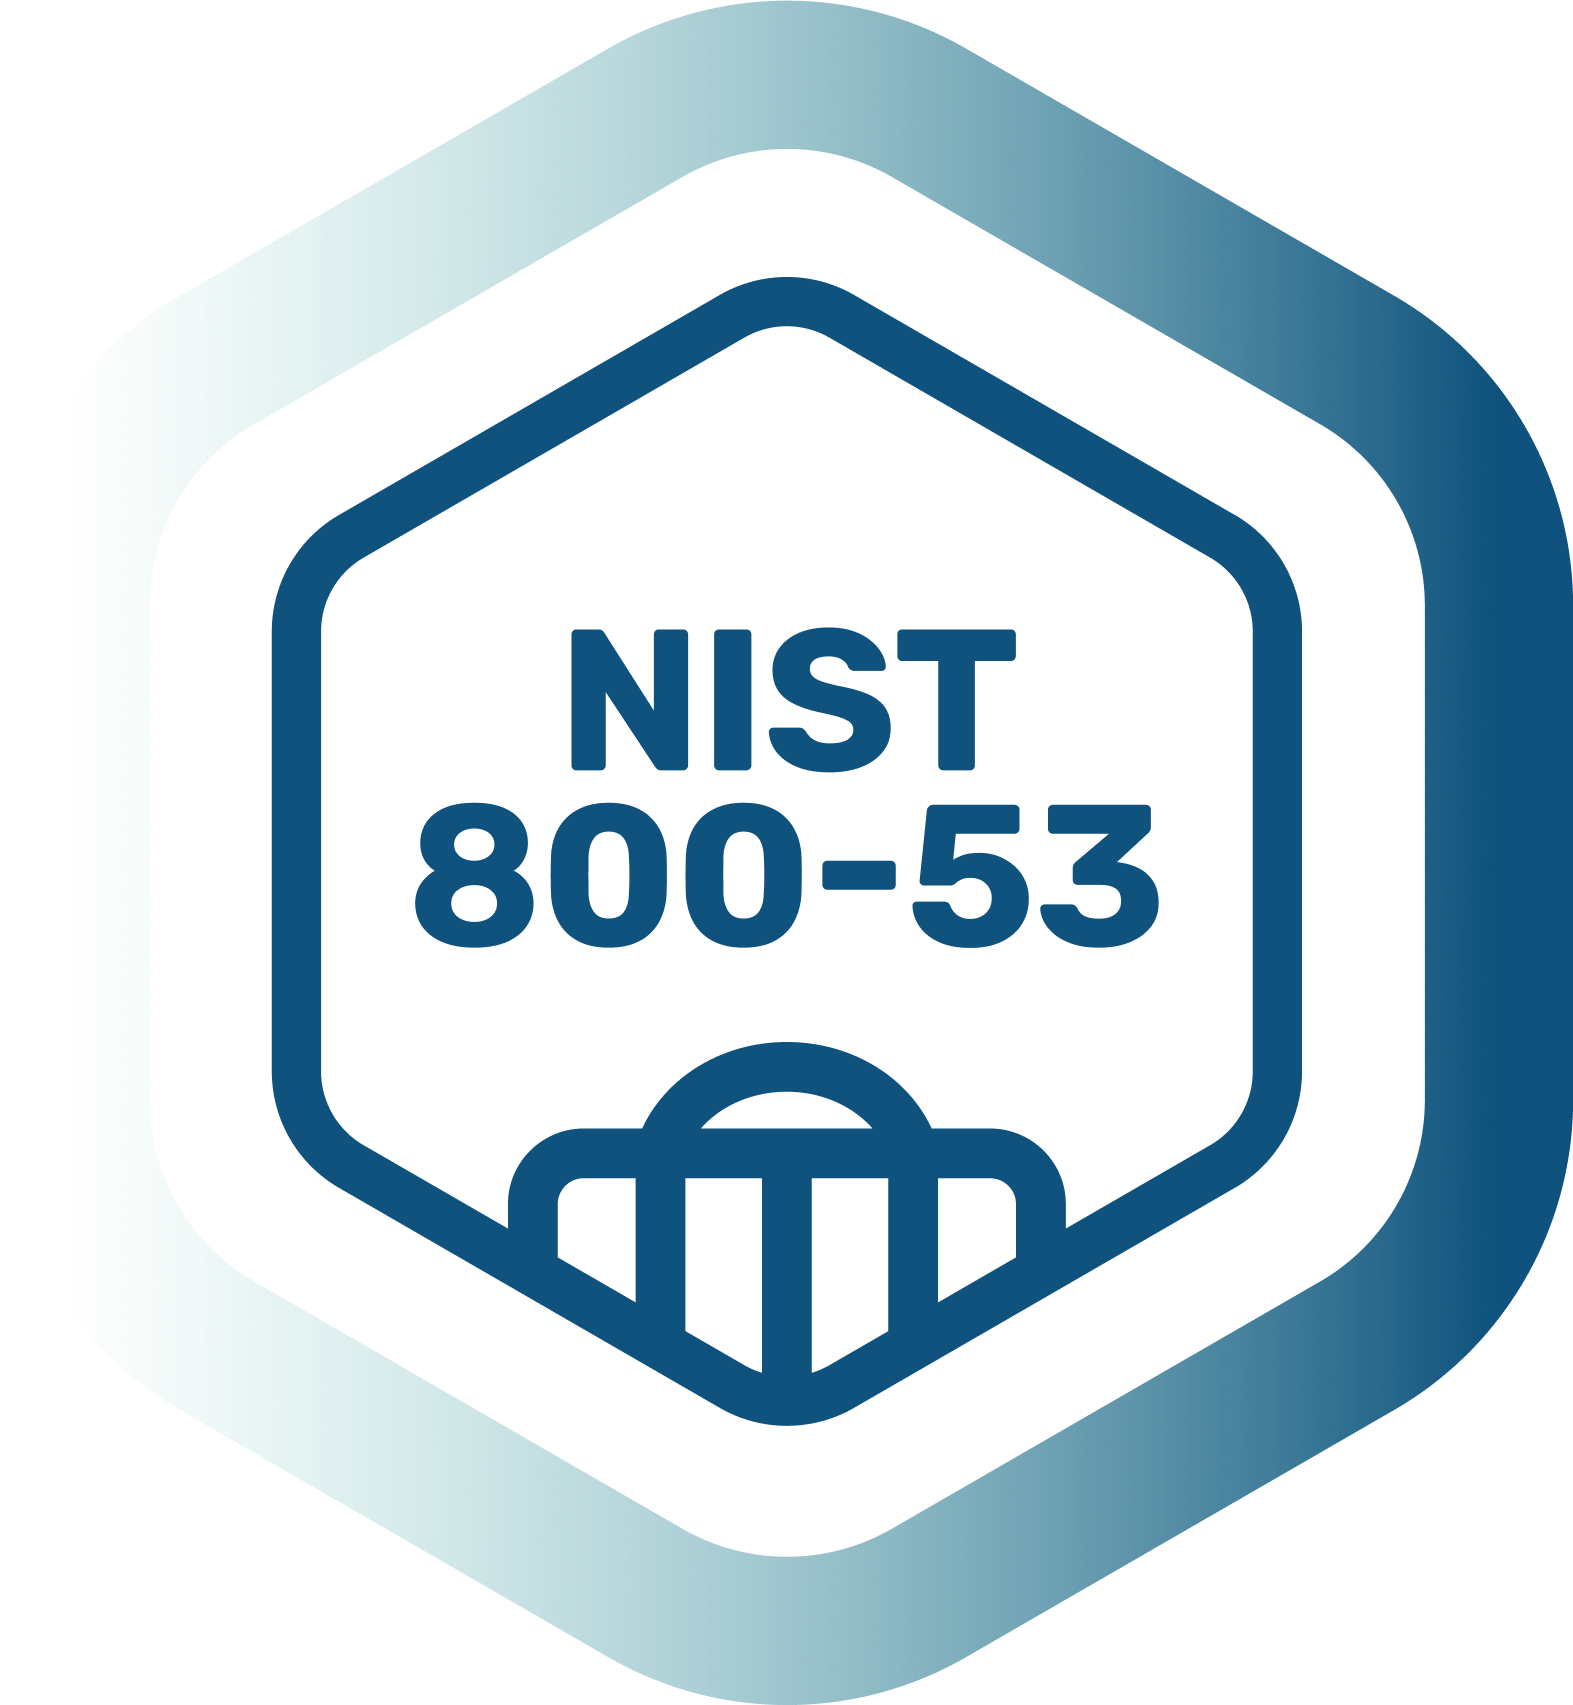 nist800-53-design